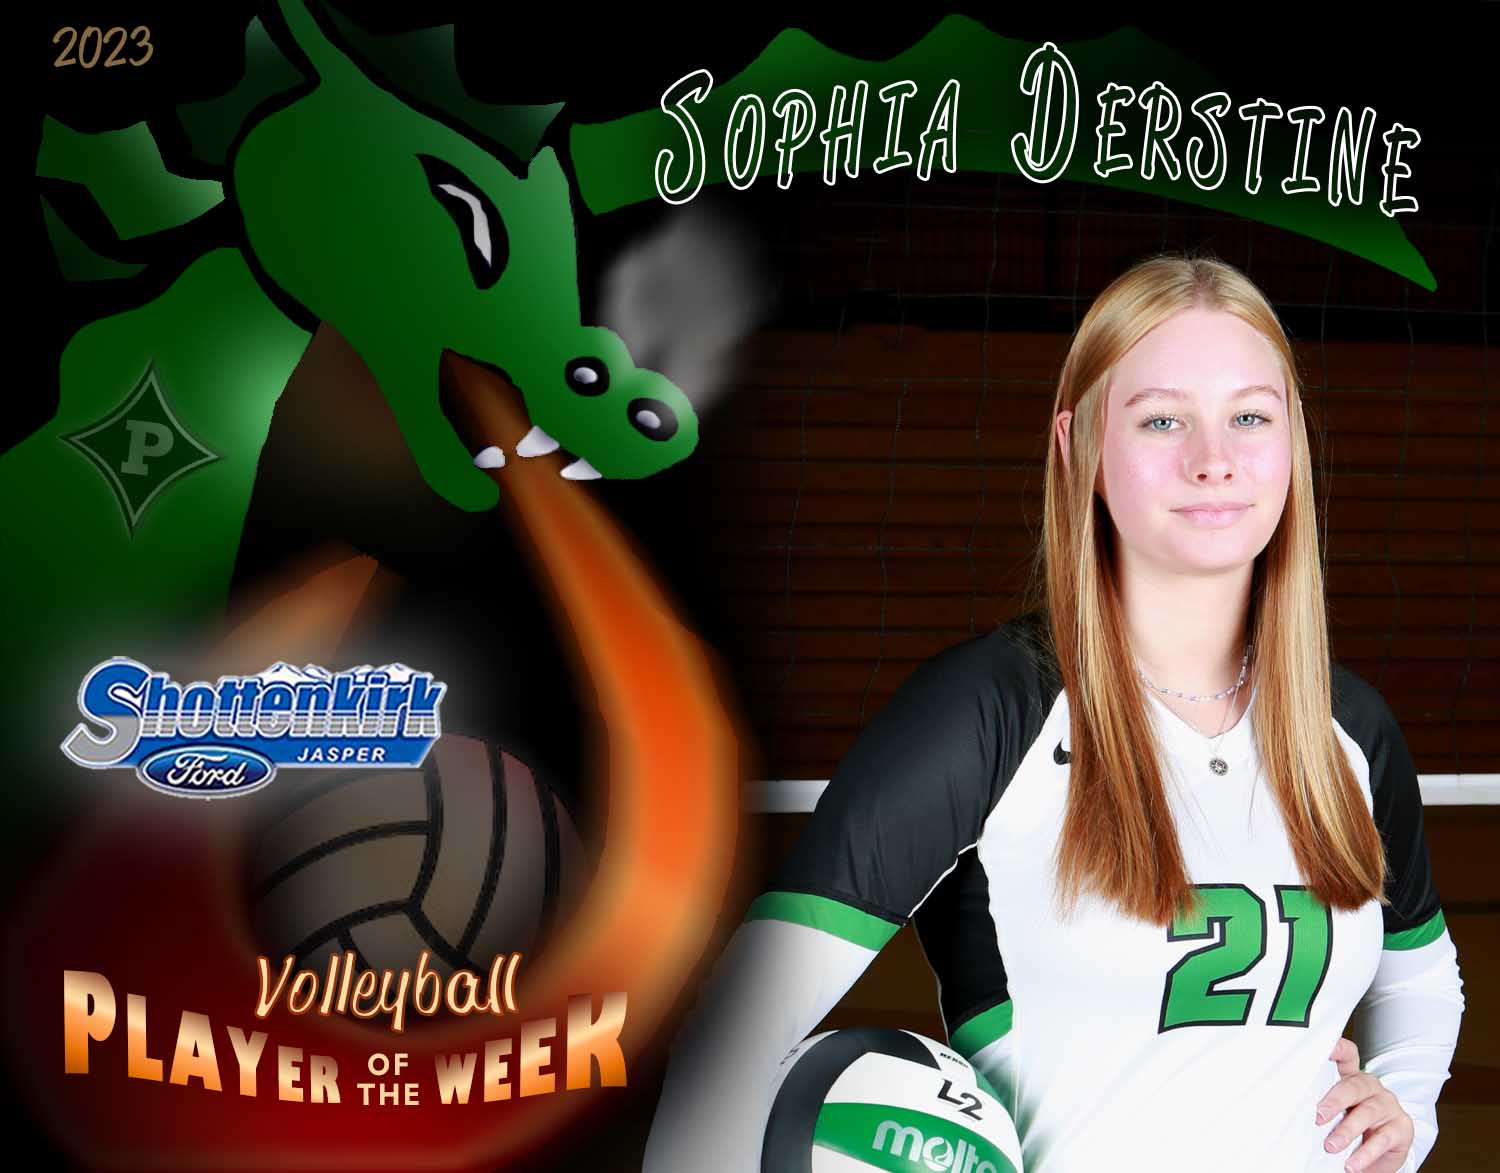 PHS Volleyball Player of the Week #4 - Sophia Derstine